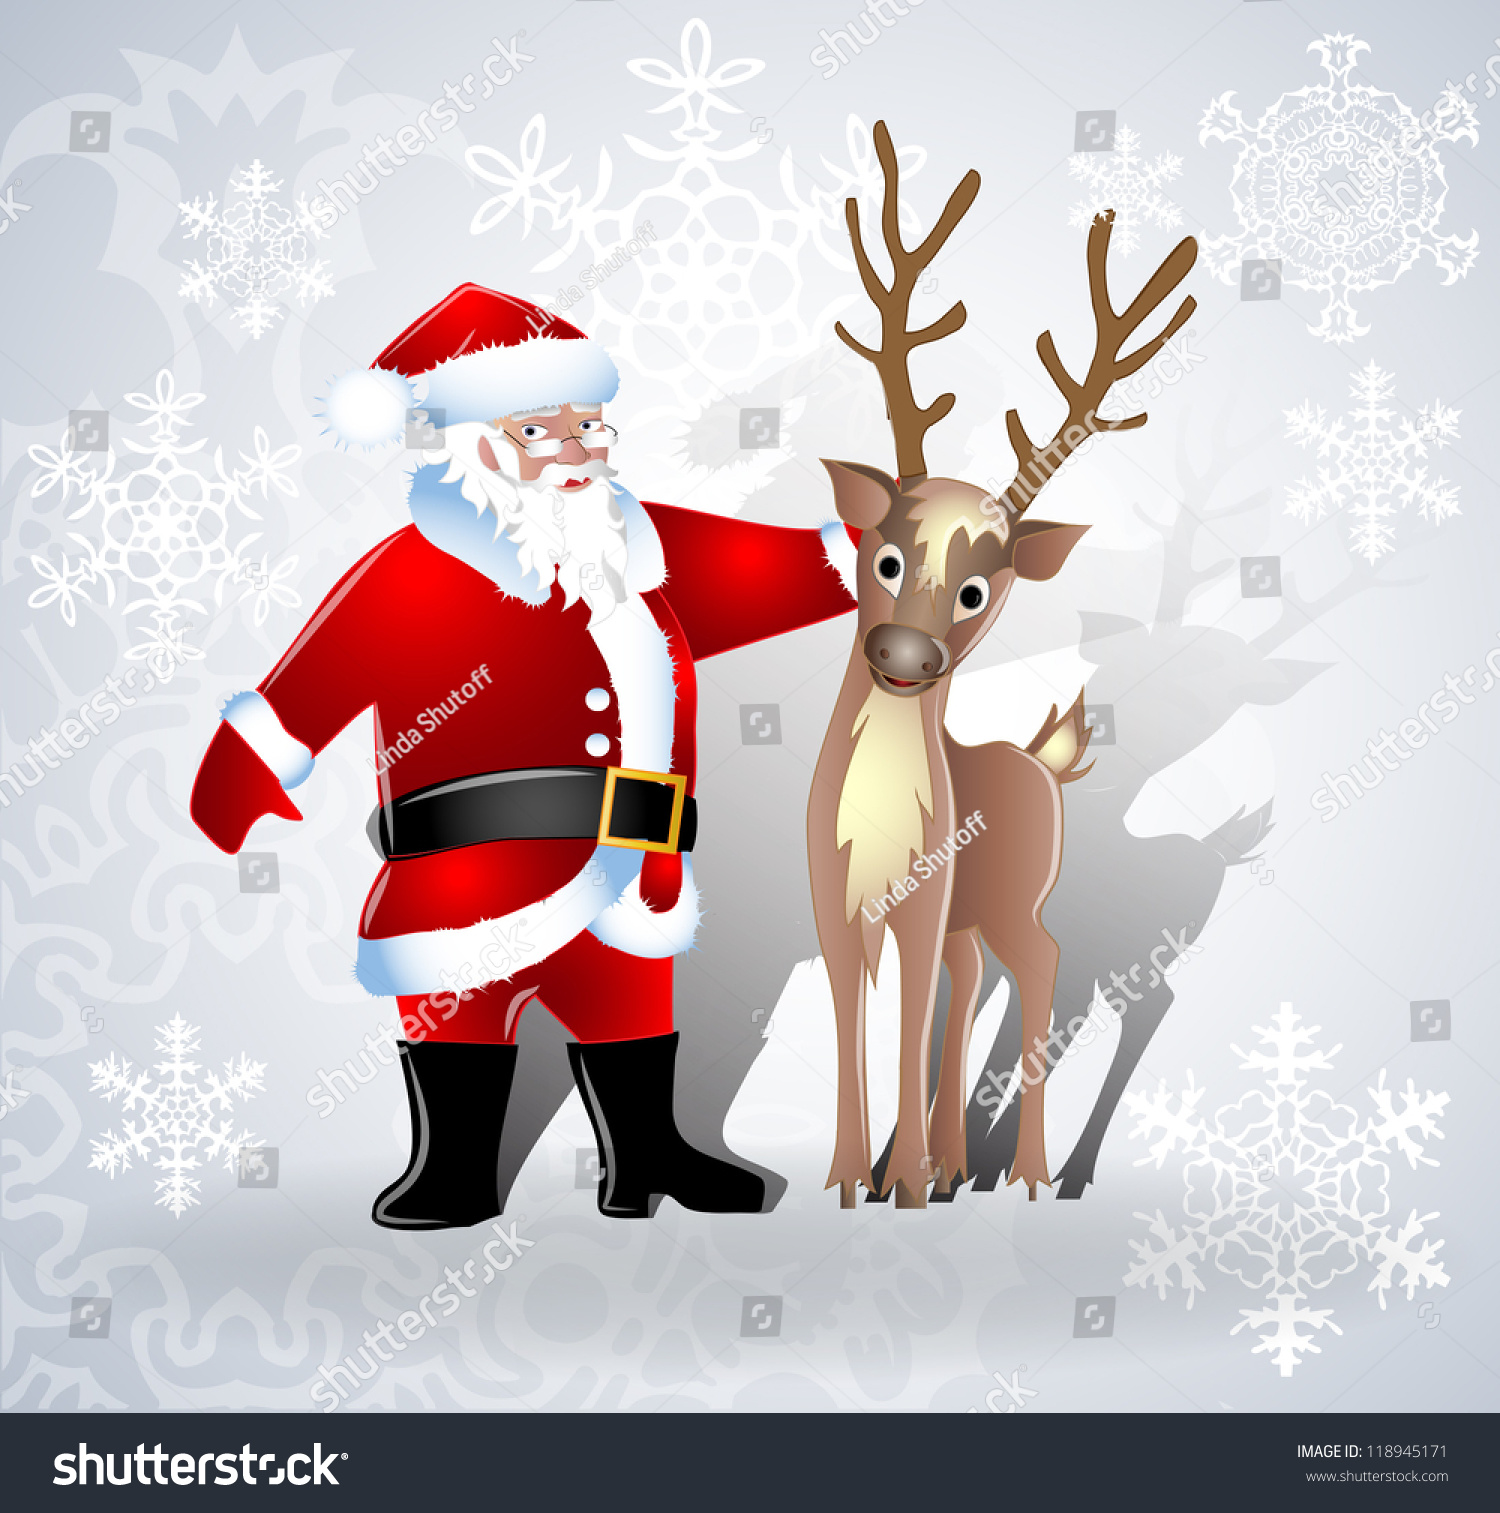 Download Santa Claus And Deer Together Stock Vector Illustration ...